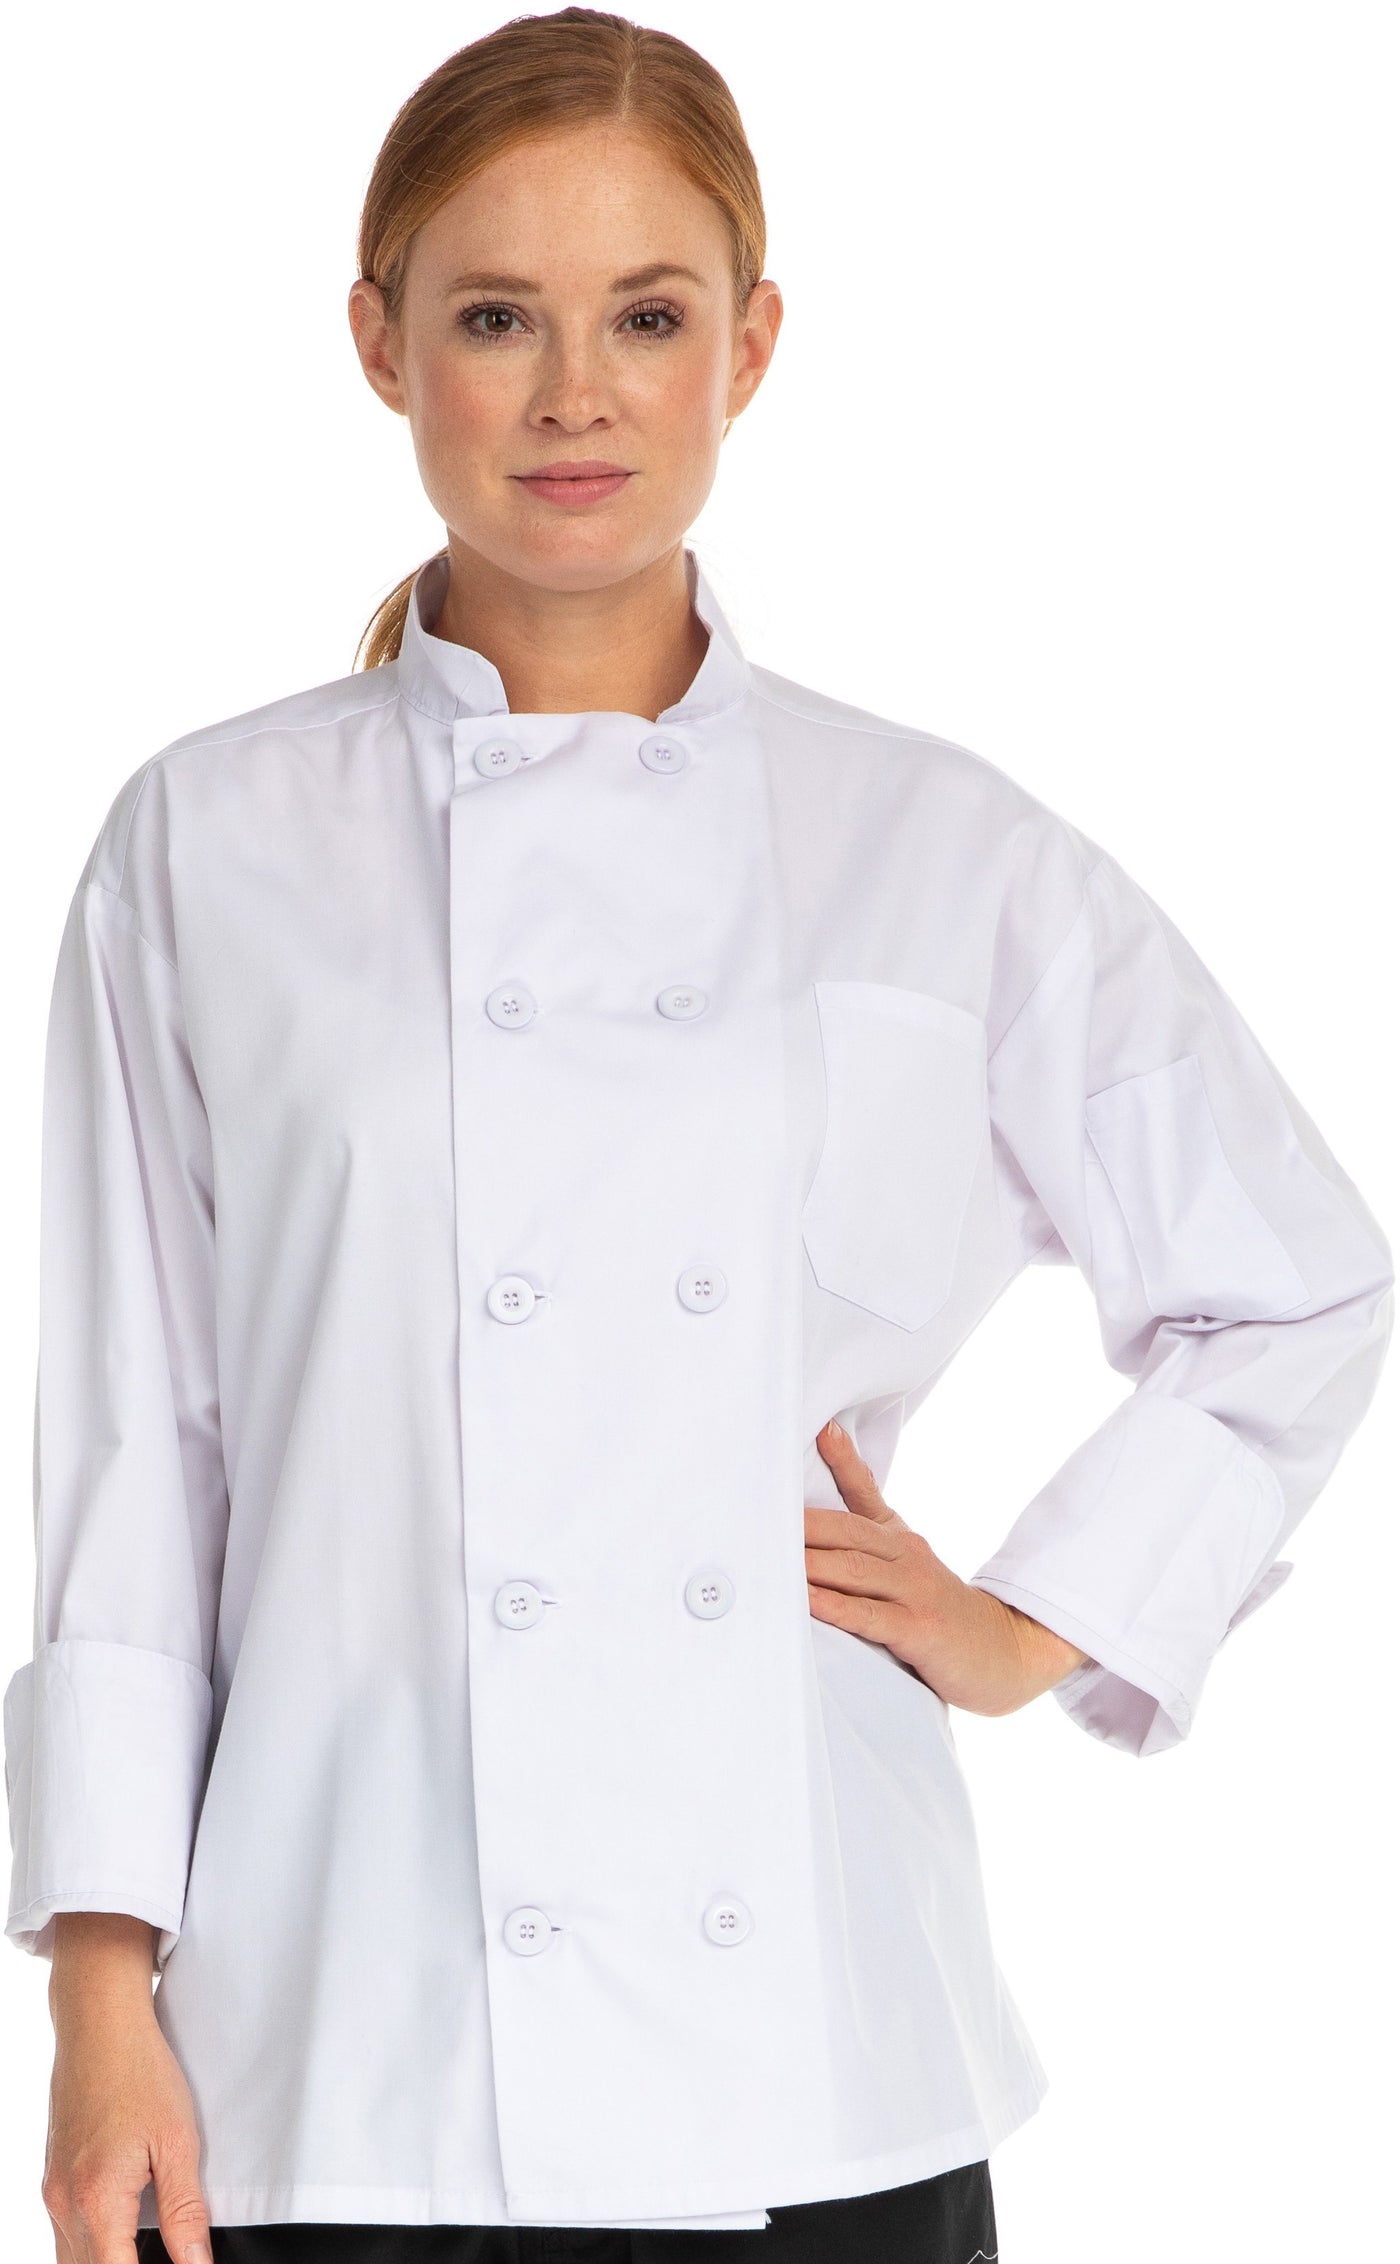 Muncy - Unisex Long Sleeve Chef Coat By MediChic XS-2XL / White